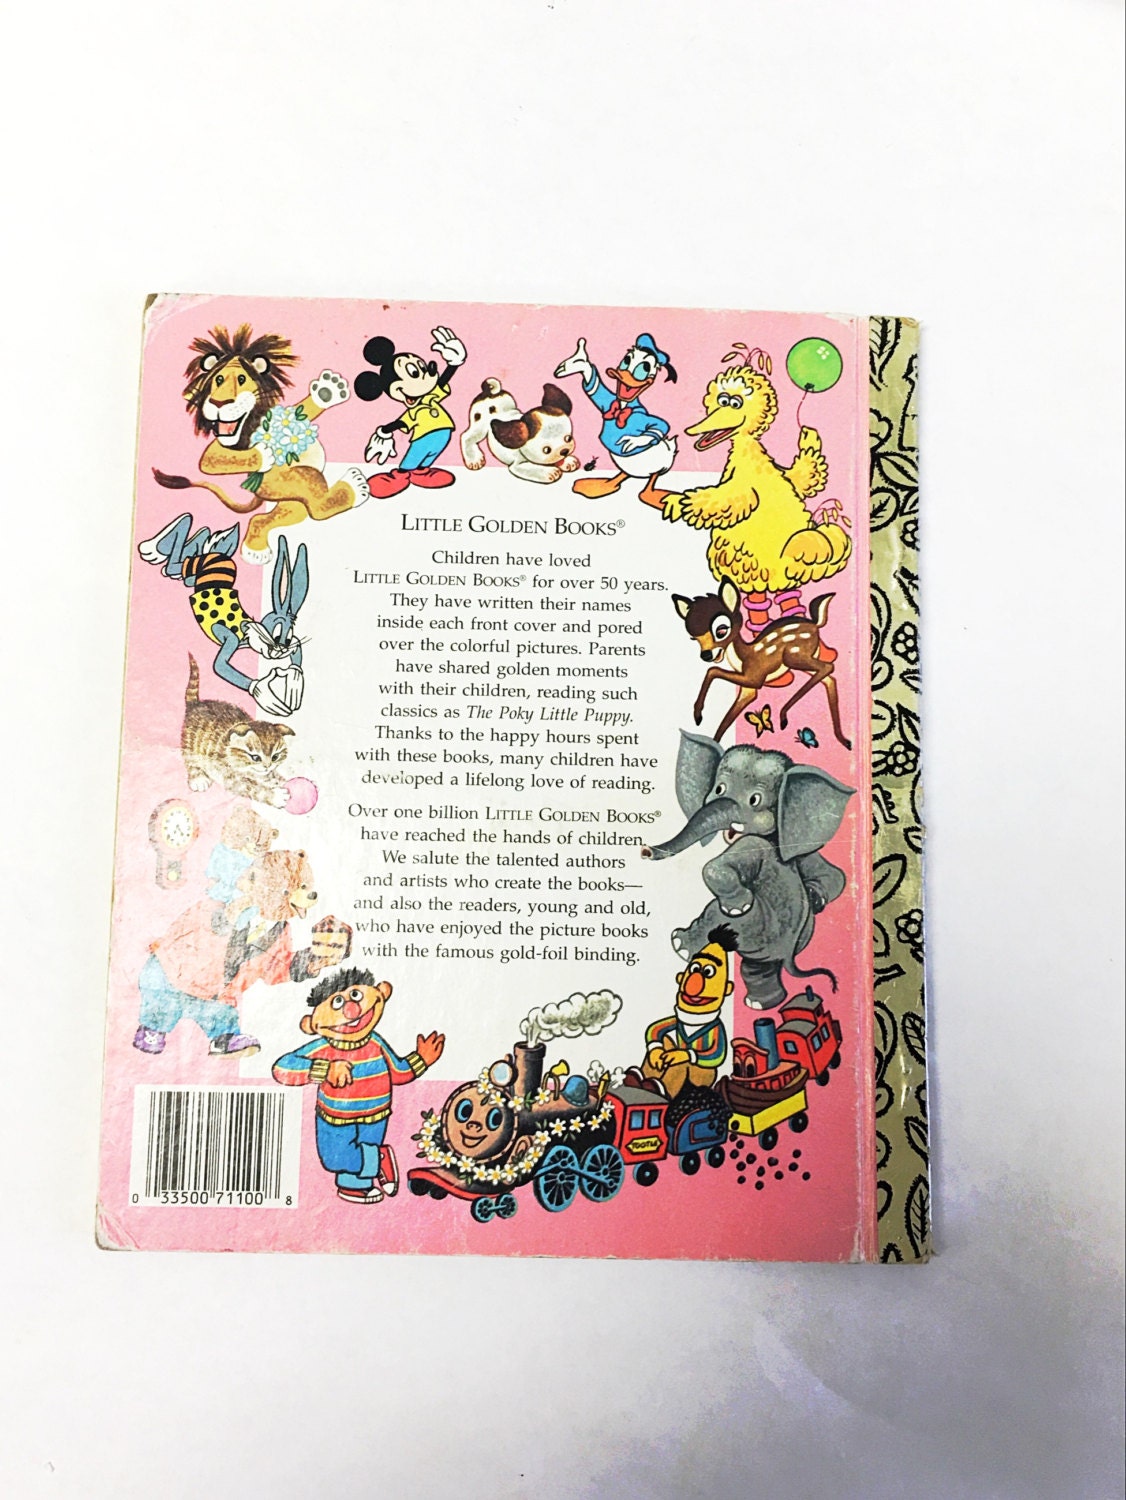 1989 Peter Pan Walt Disney Little Golden Book. Children's at home reading. Elementary school toddler learn to read.